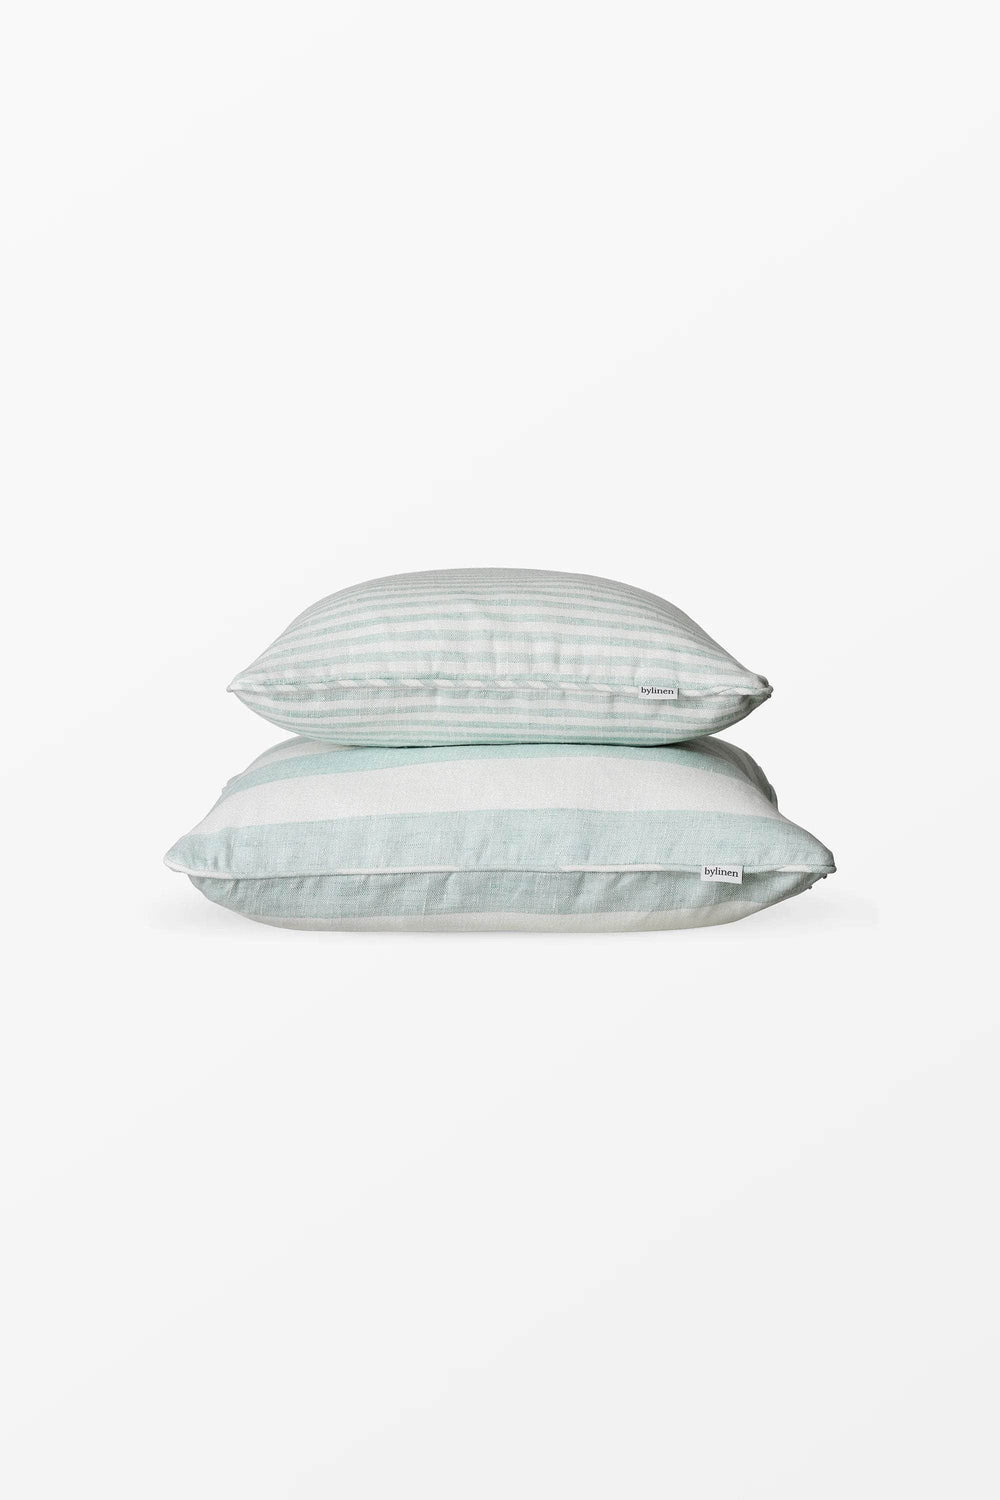 Turquoise + White Striped Linen Cushion